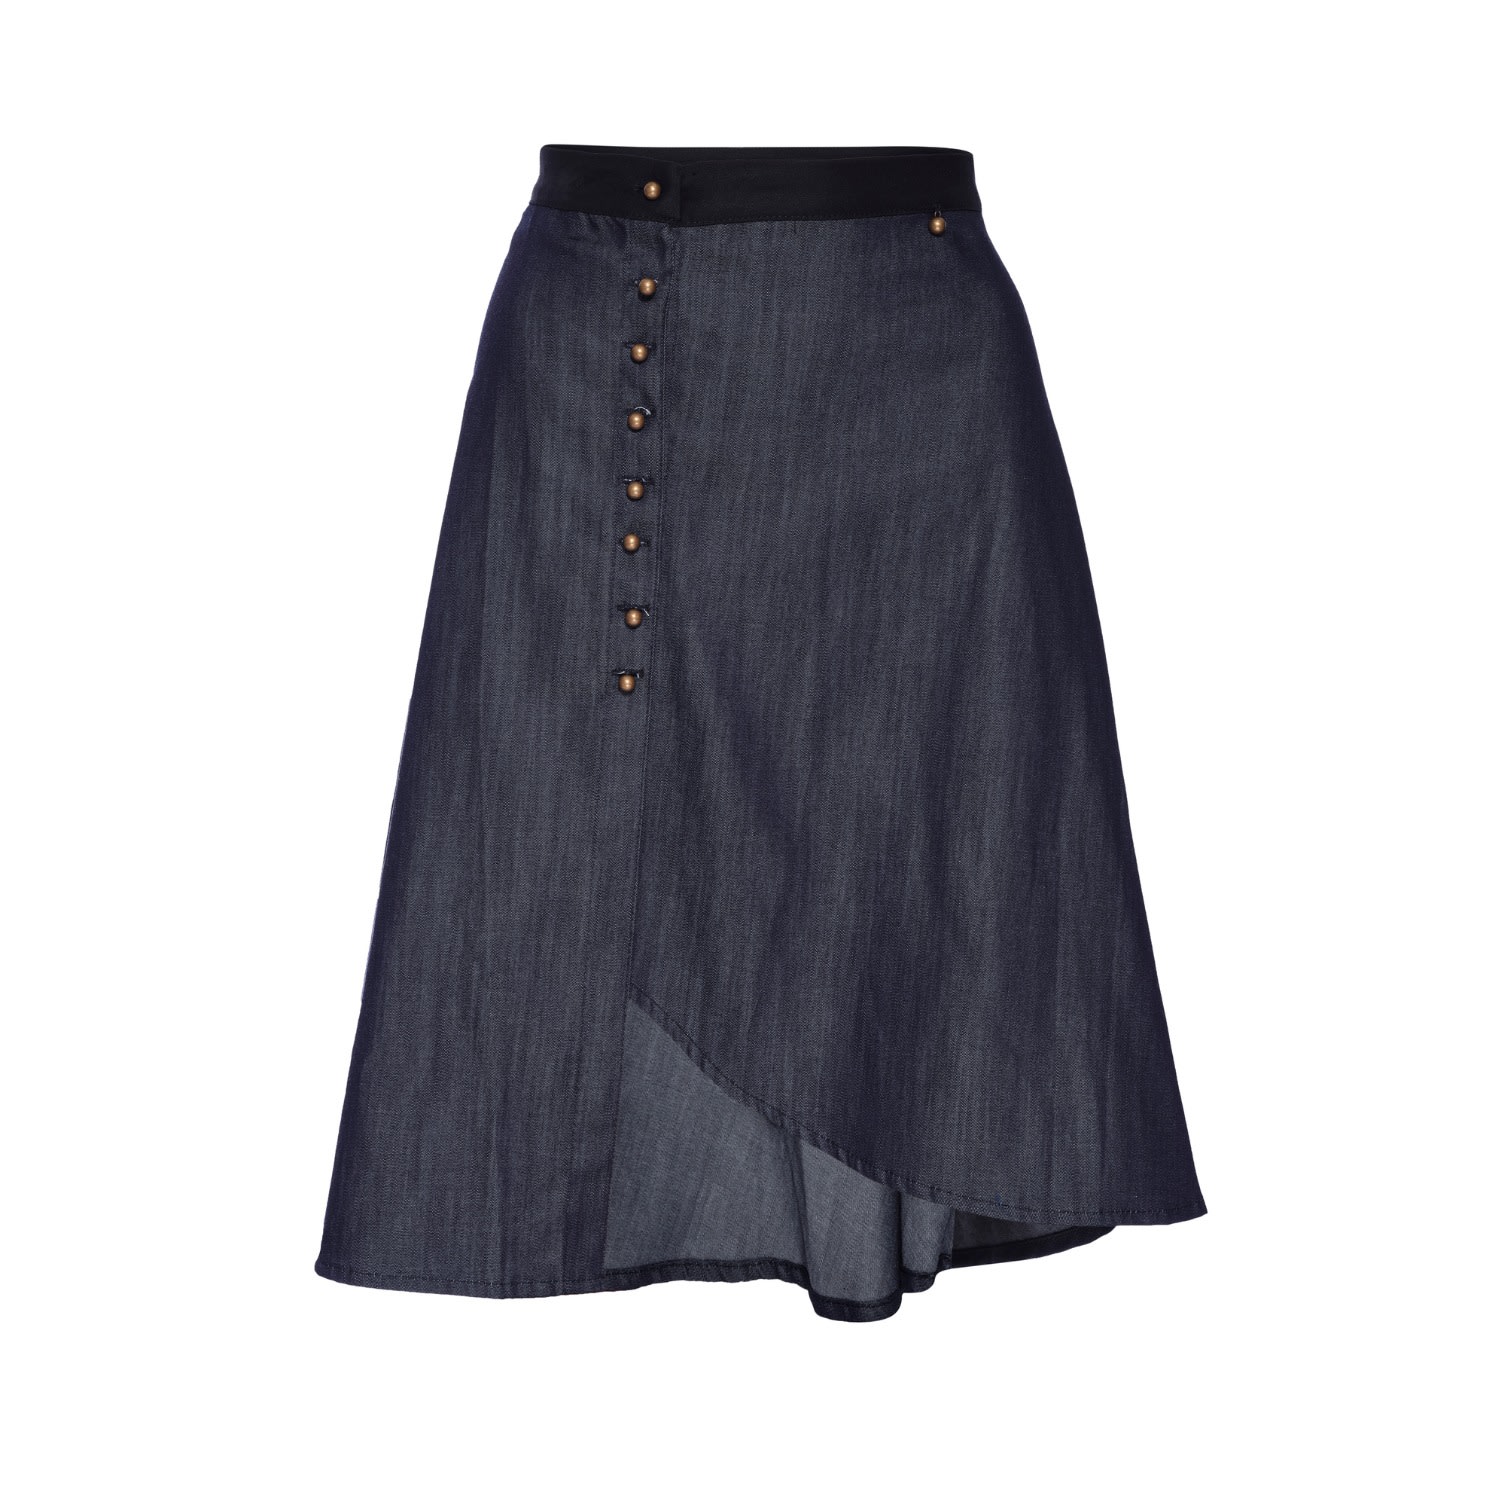 Shop Lahive Women's Blue Jessica Button Down Denim Skirt